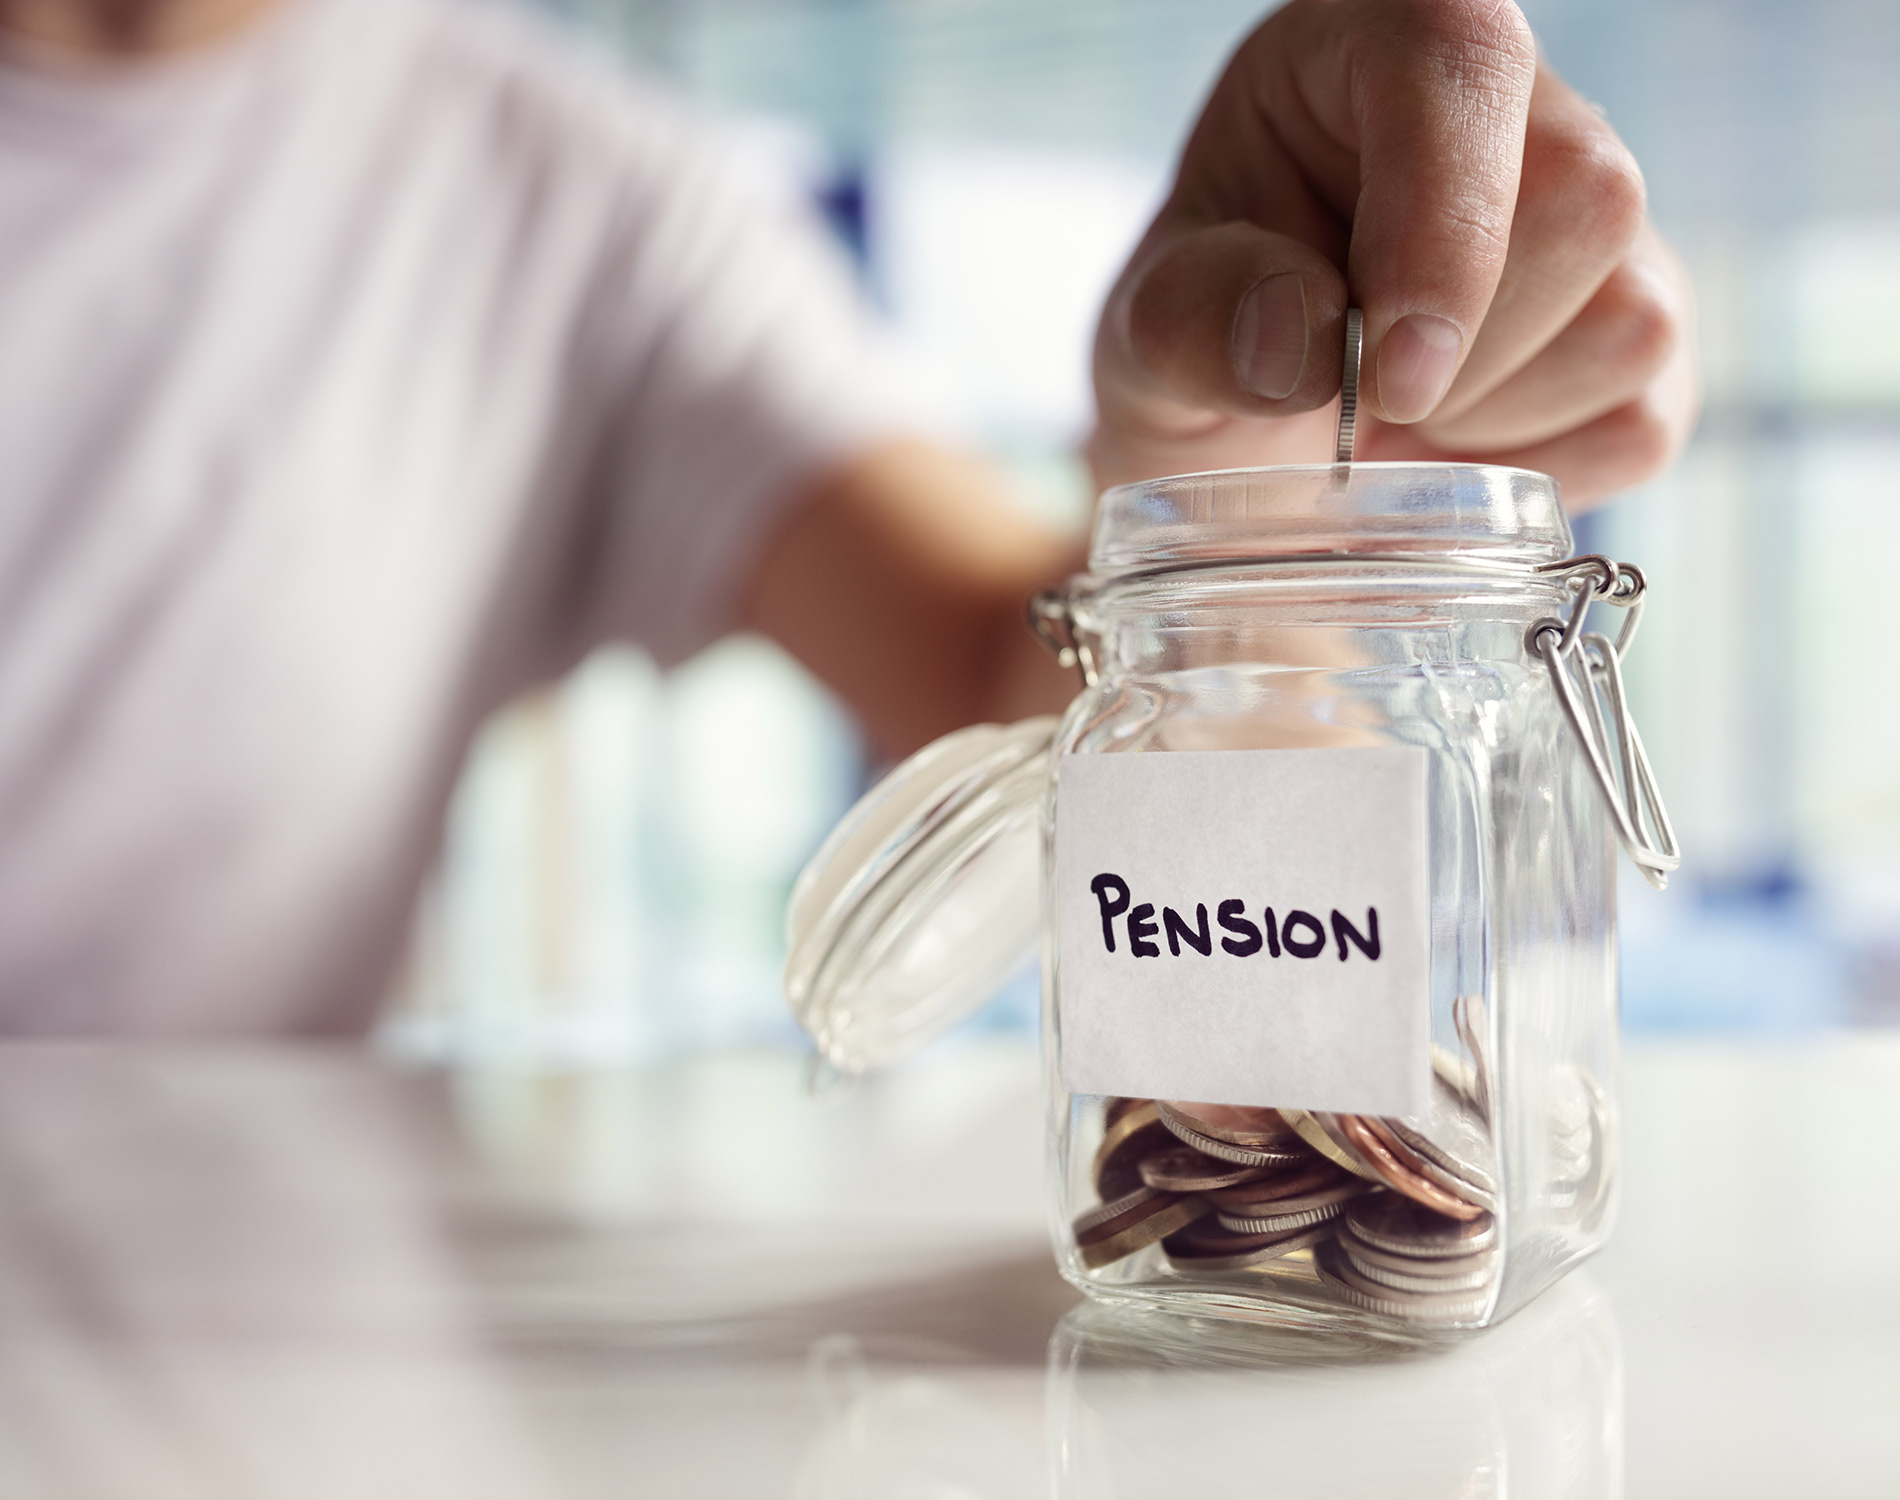 Pension savings